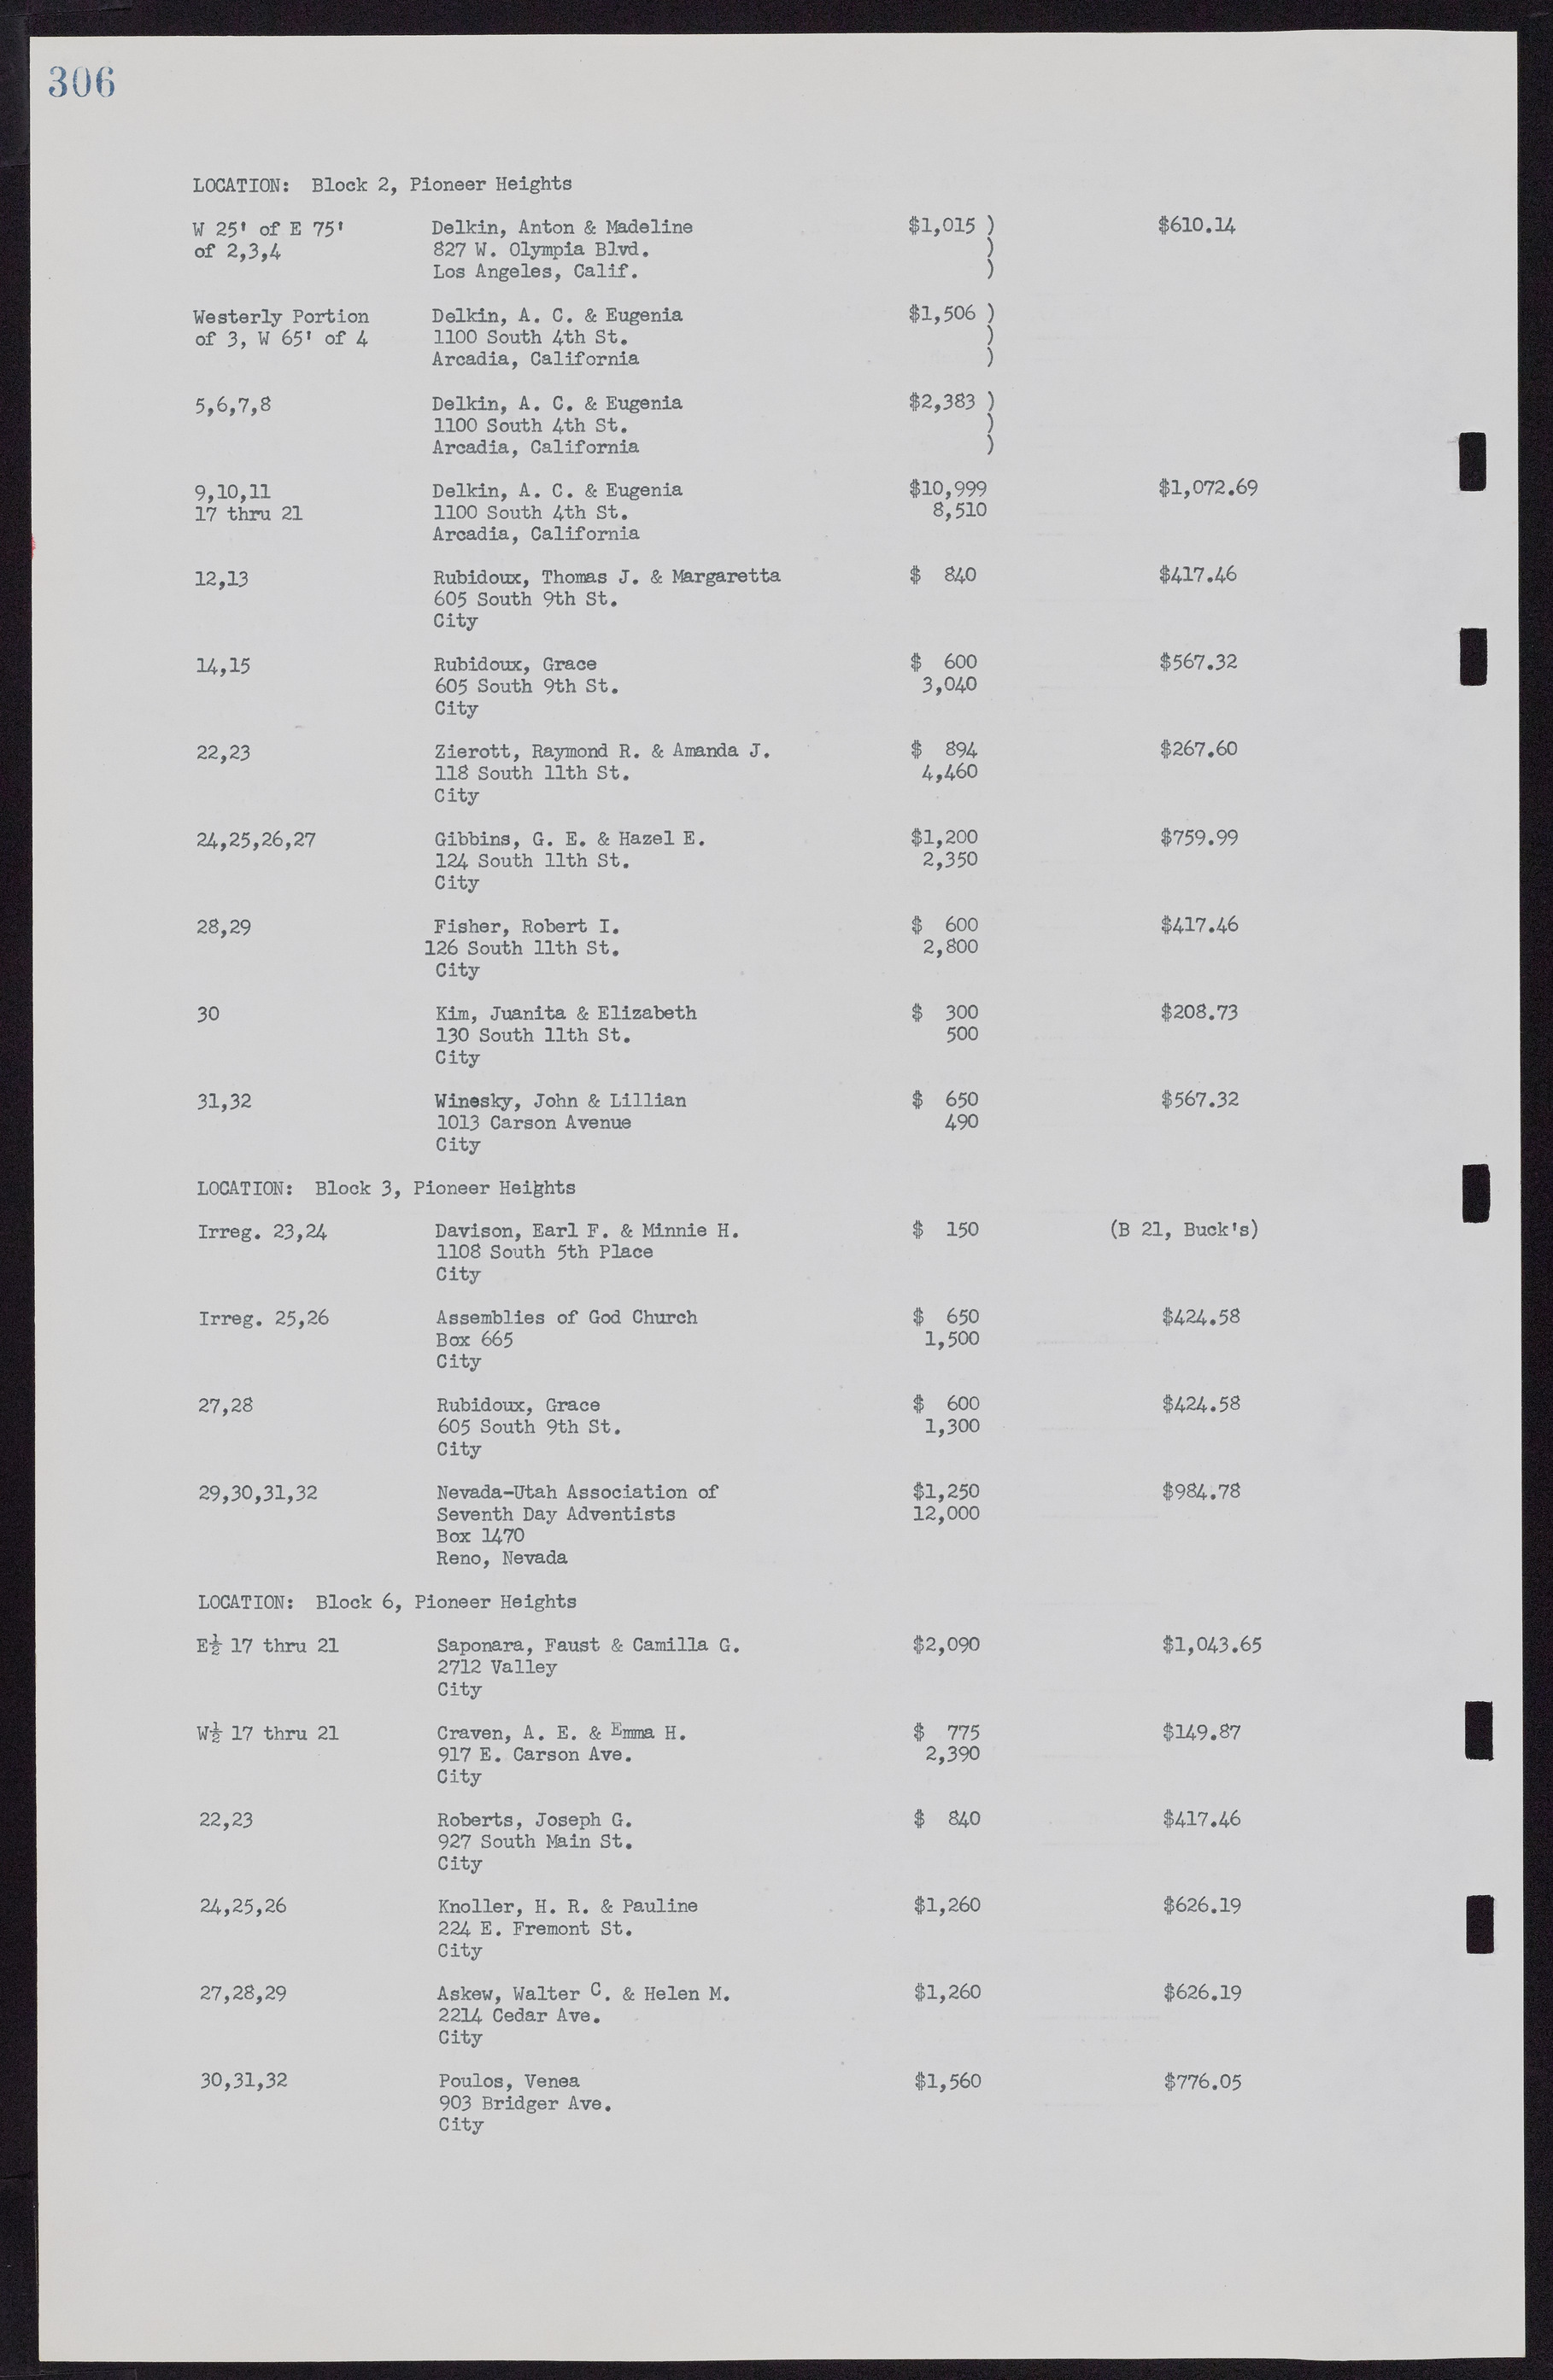 Las Vegas City Commission Minutes, November 7, 1949 to May 21, 1952, lvc000007-318